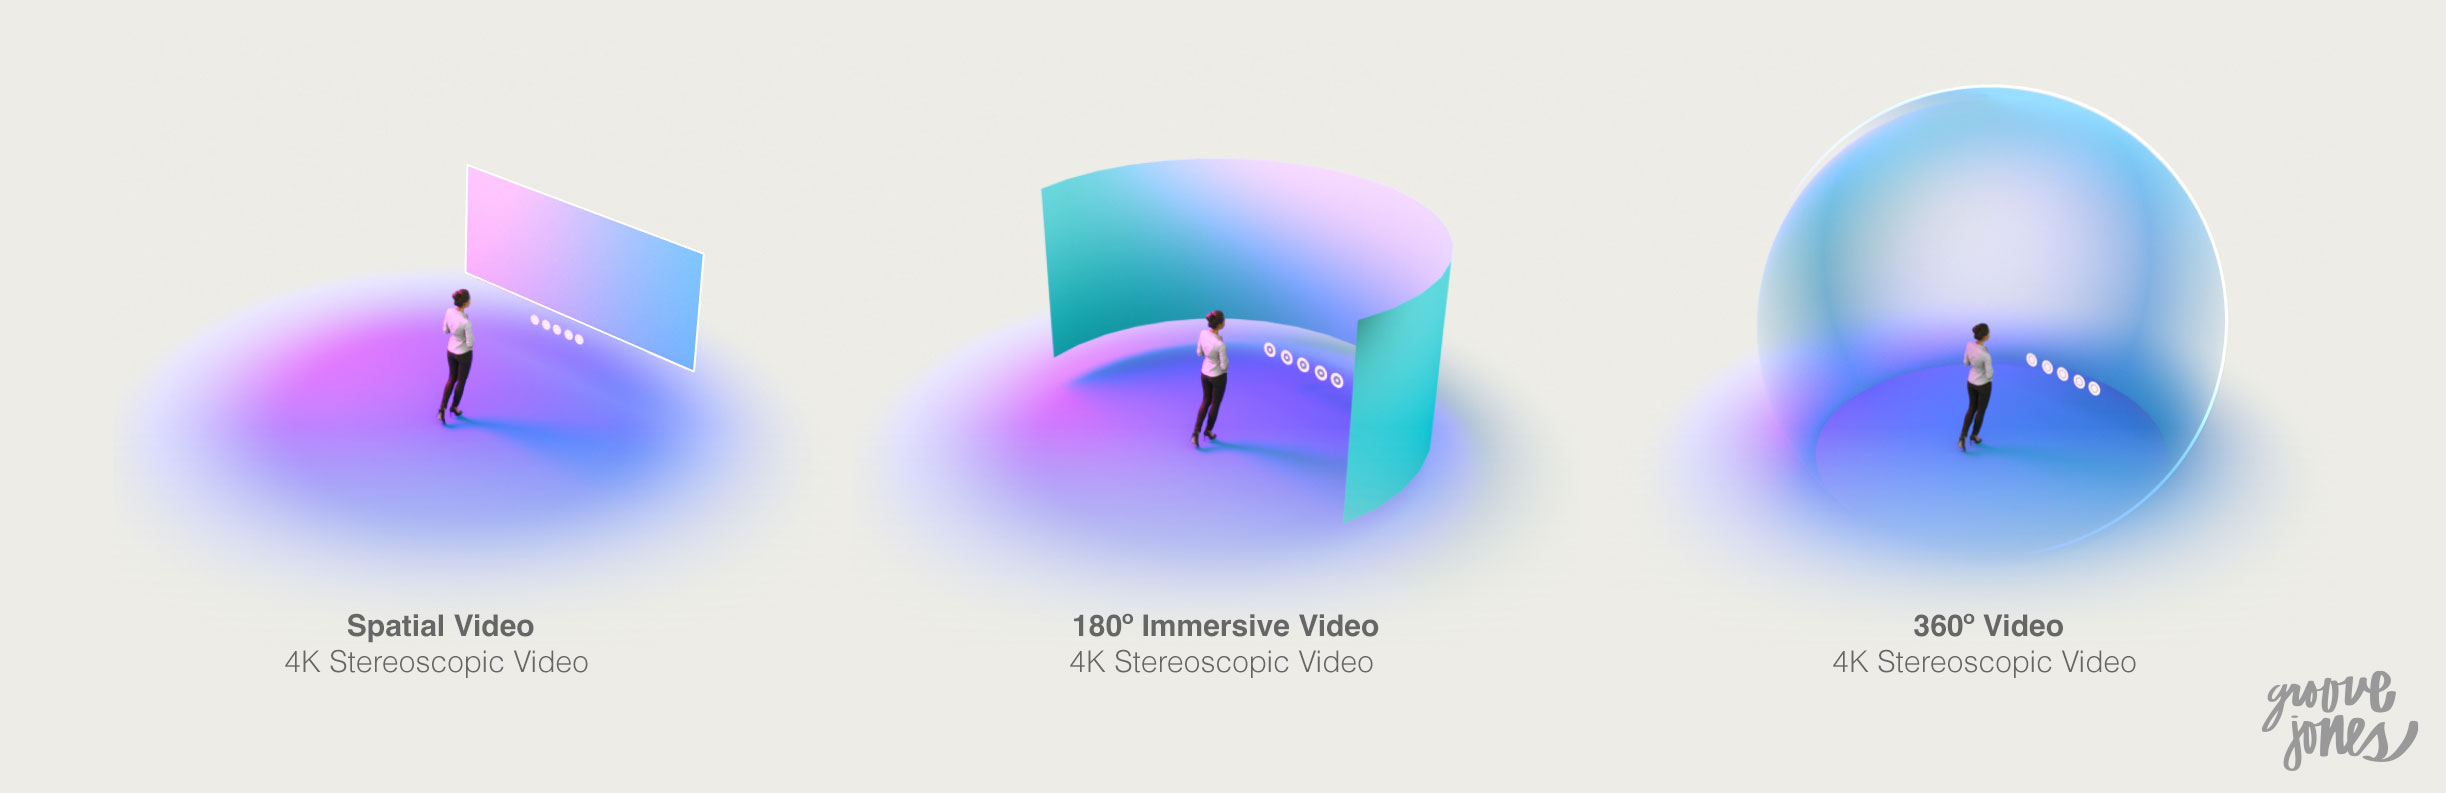 Apple Vision Pro Emerging Video